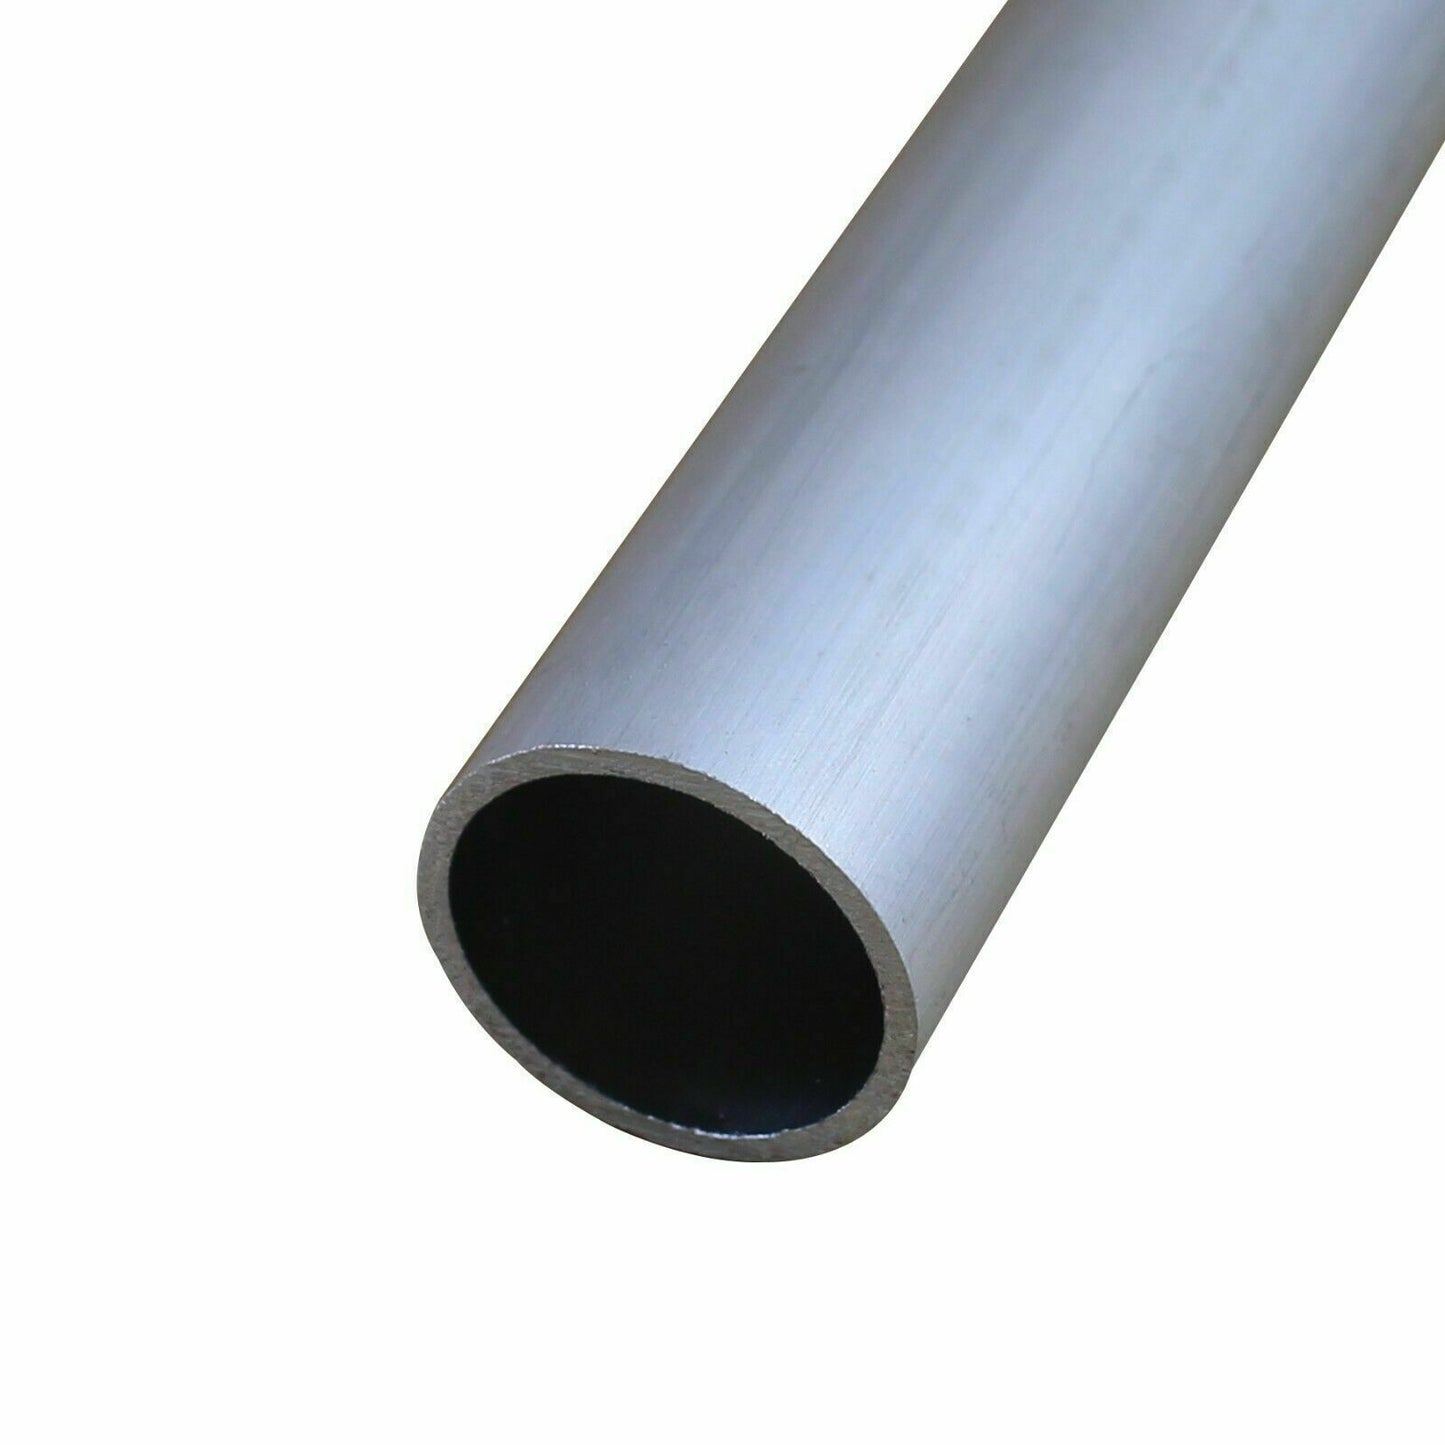 OD 18 mm ID 12 mm 1 Pcs Aluminum Round Tube Pipe